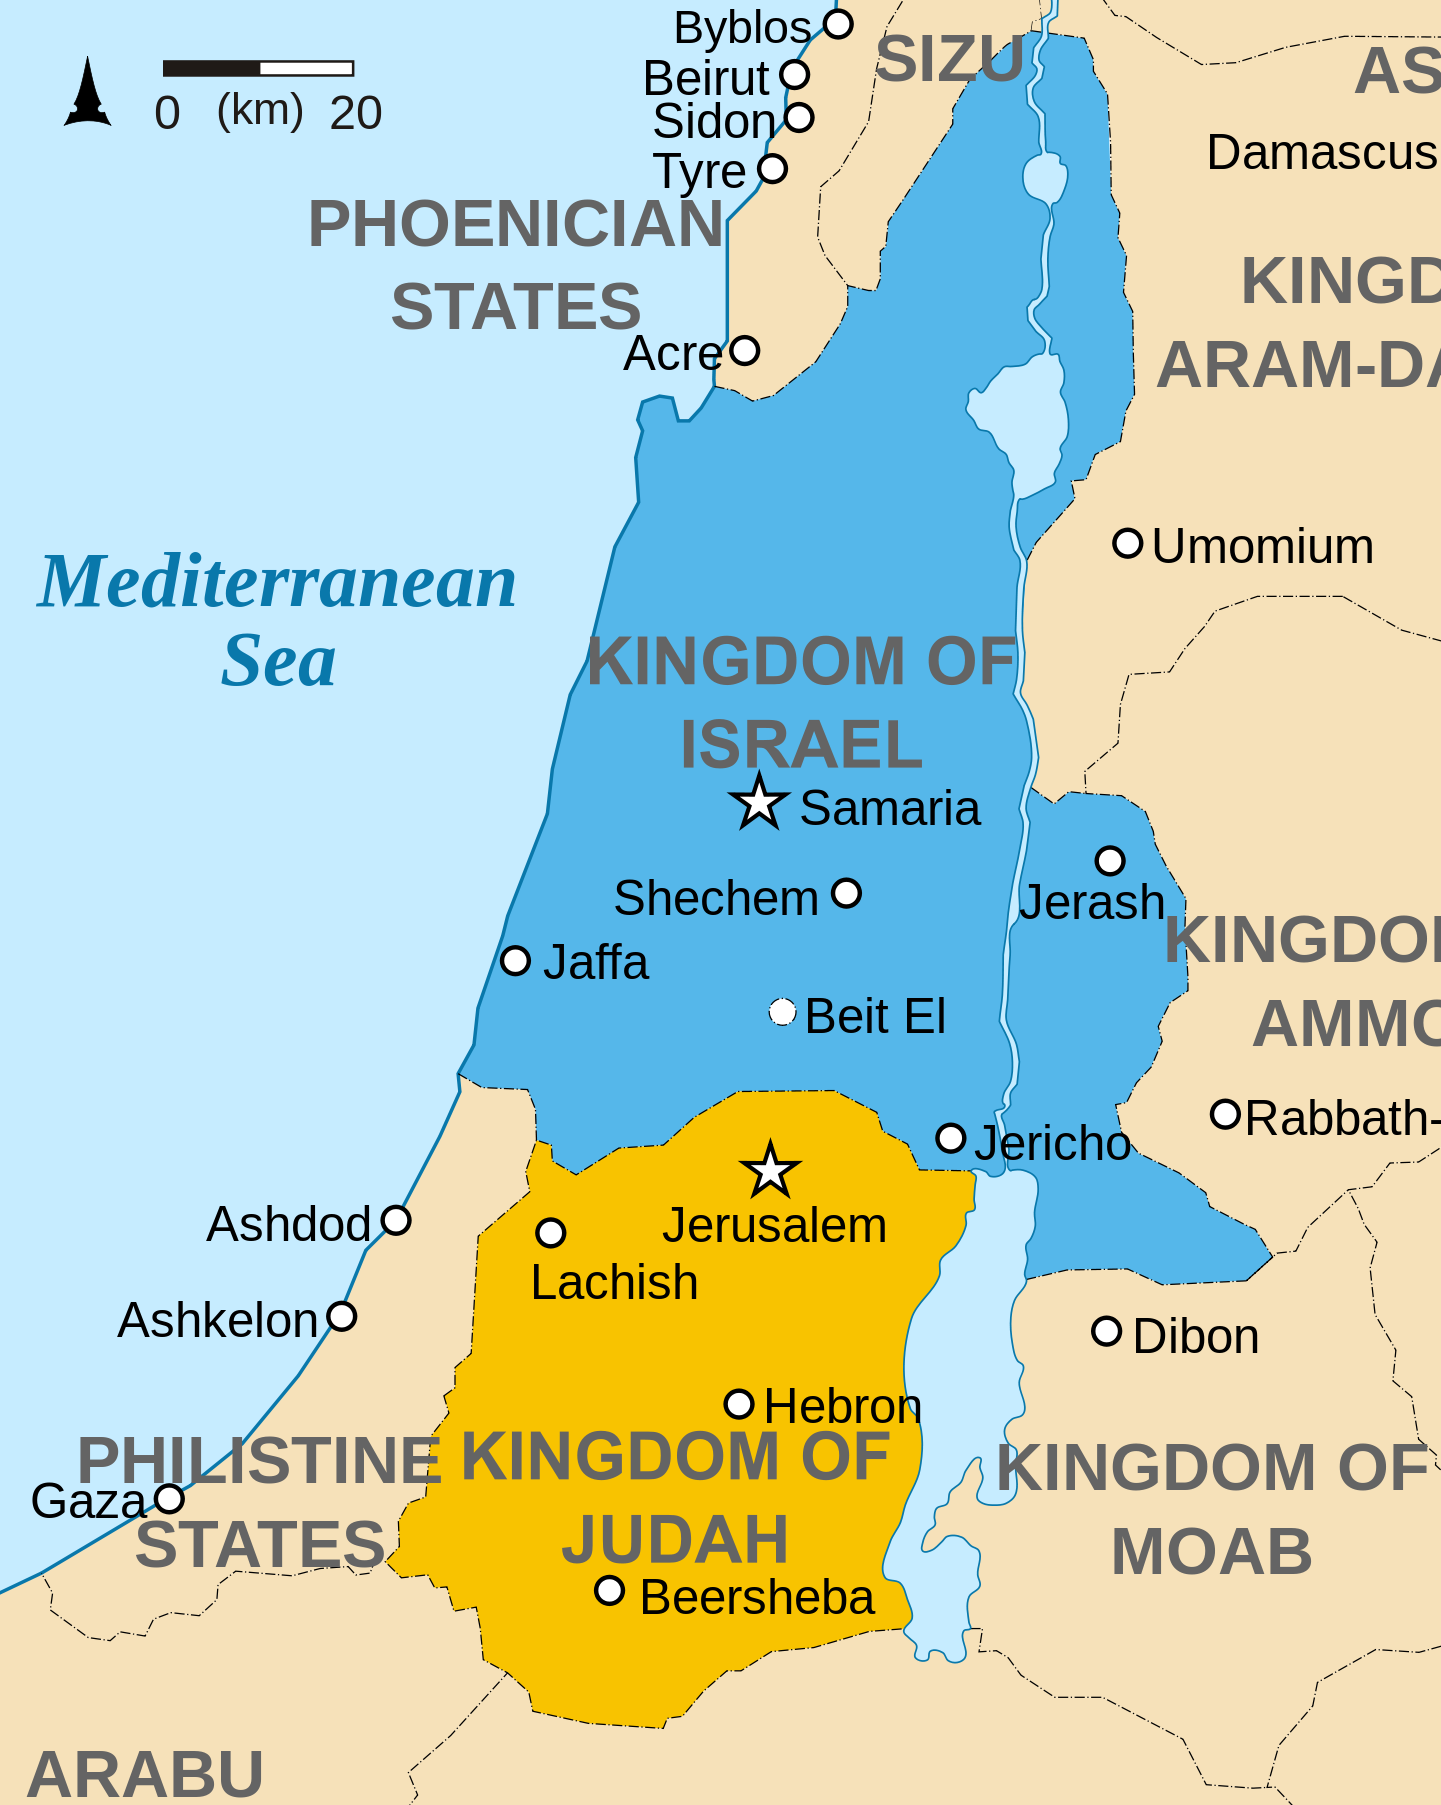 Kingdoms_of_Israel_and_Judah.png